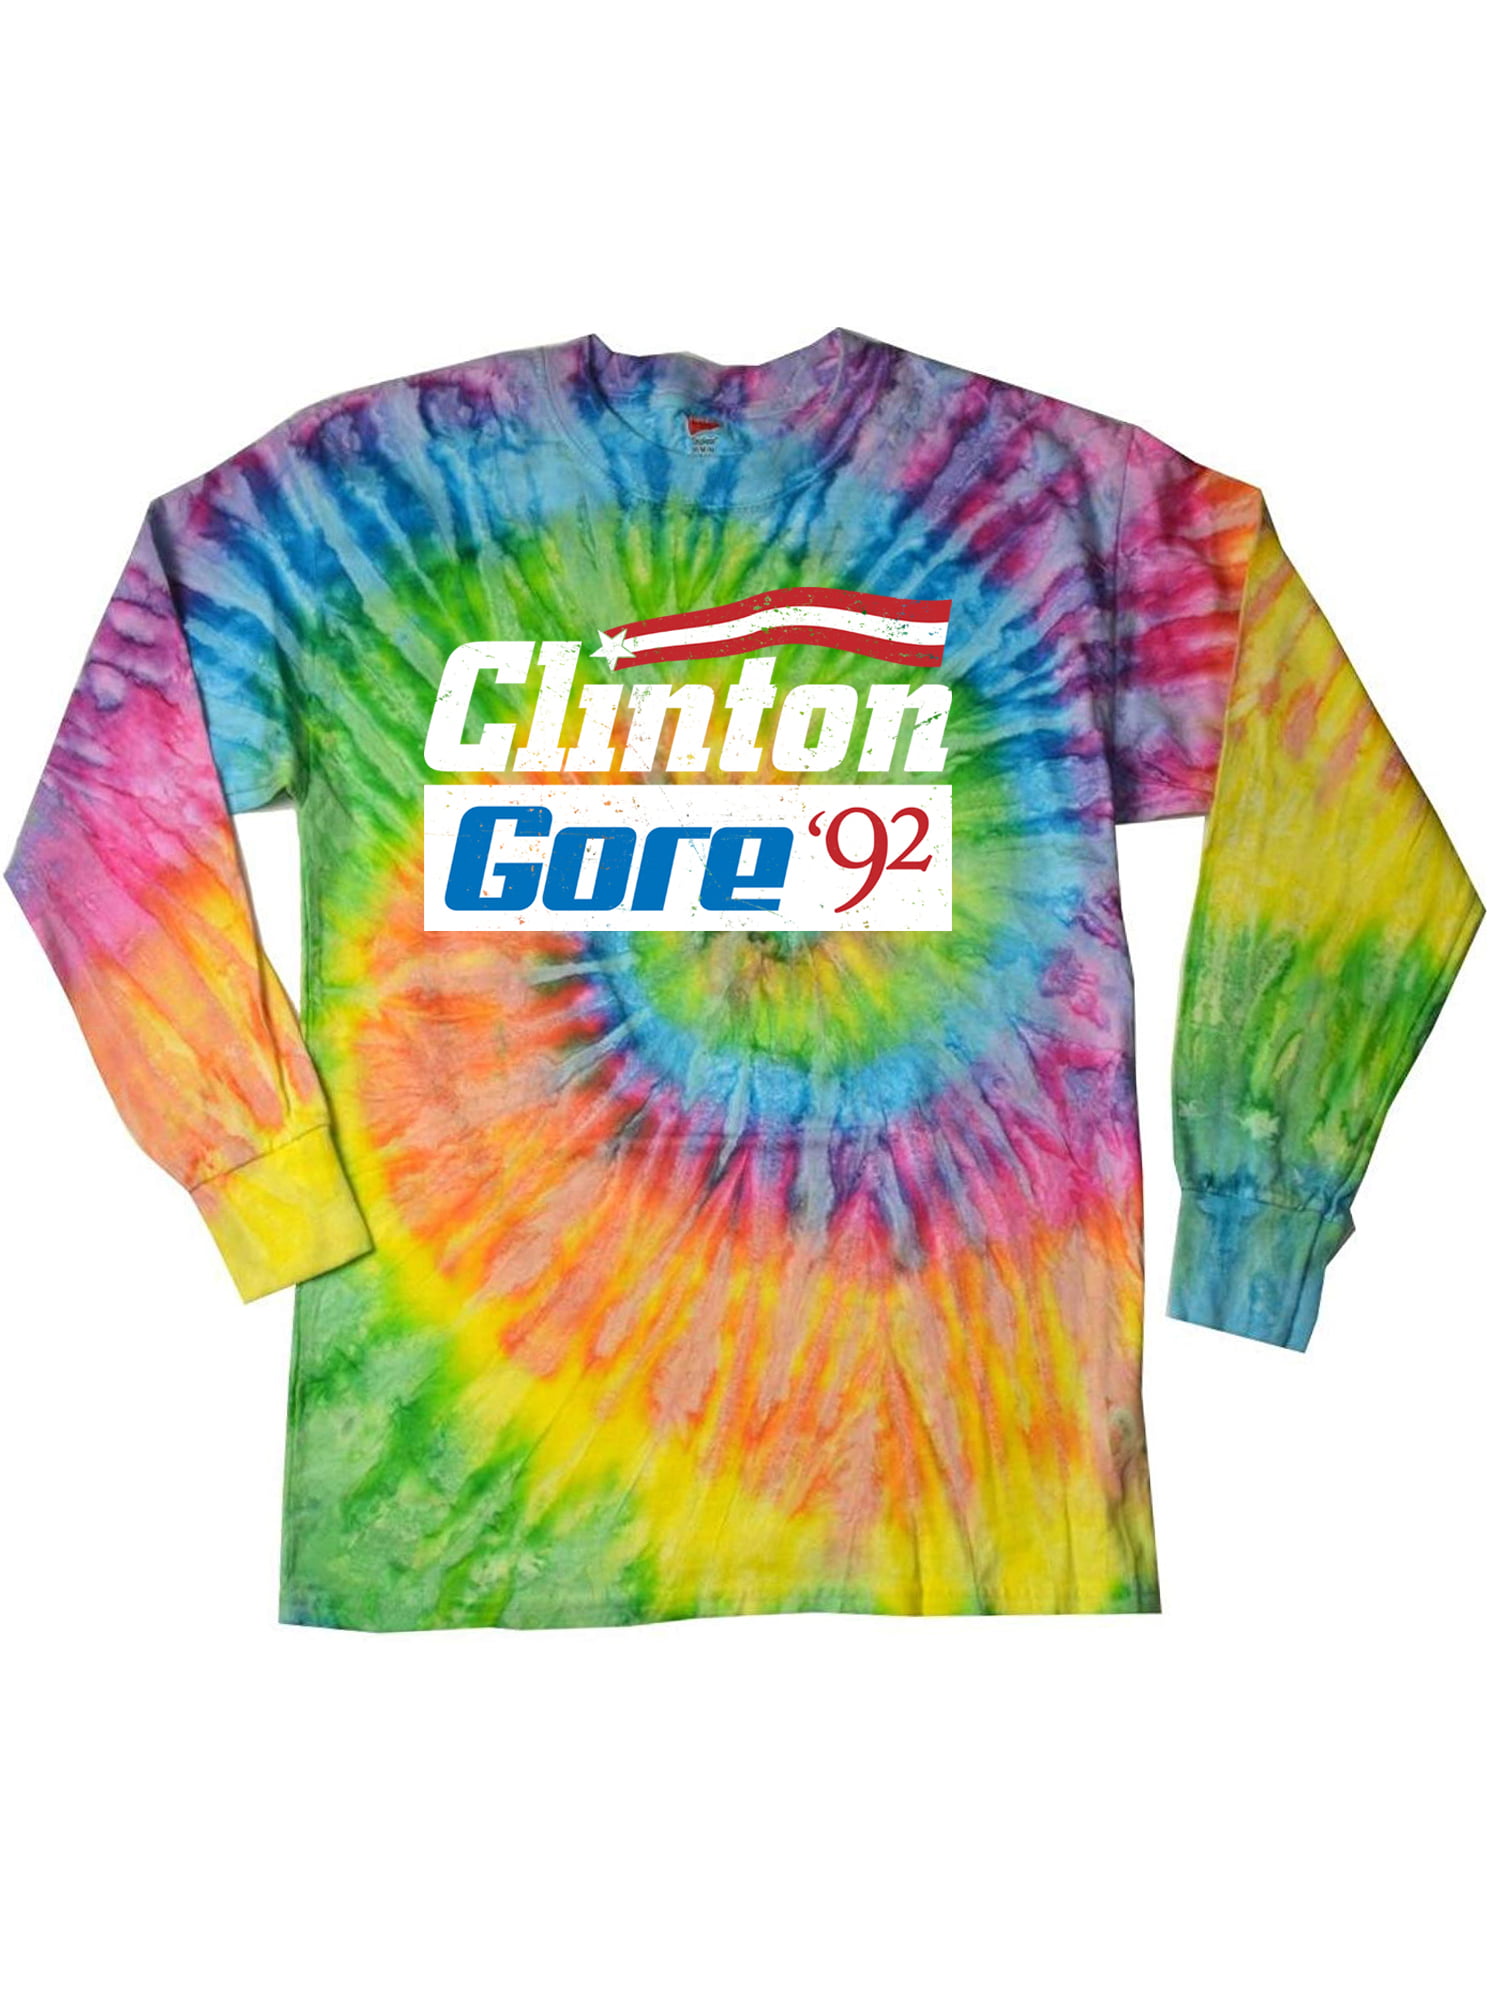 Clinton Gore 92 Sleeveless Tanks Tops T-Shirts Fit Mens 